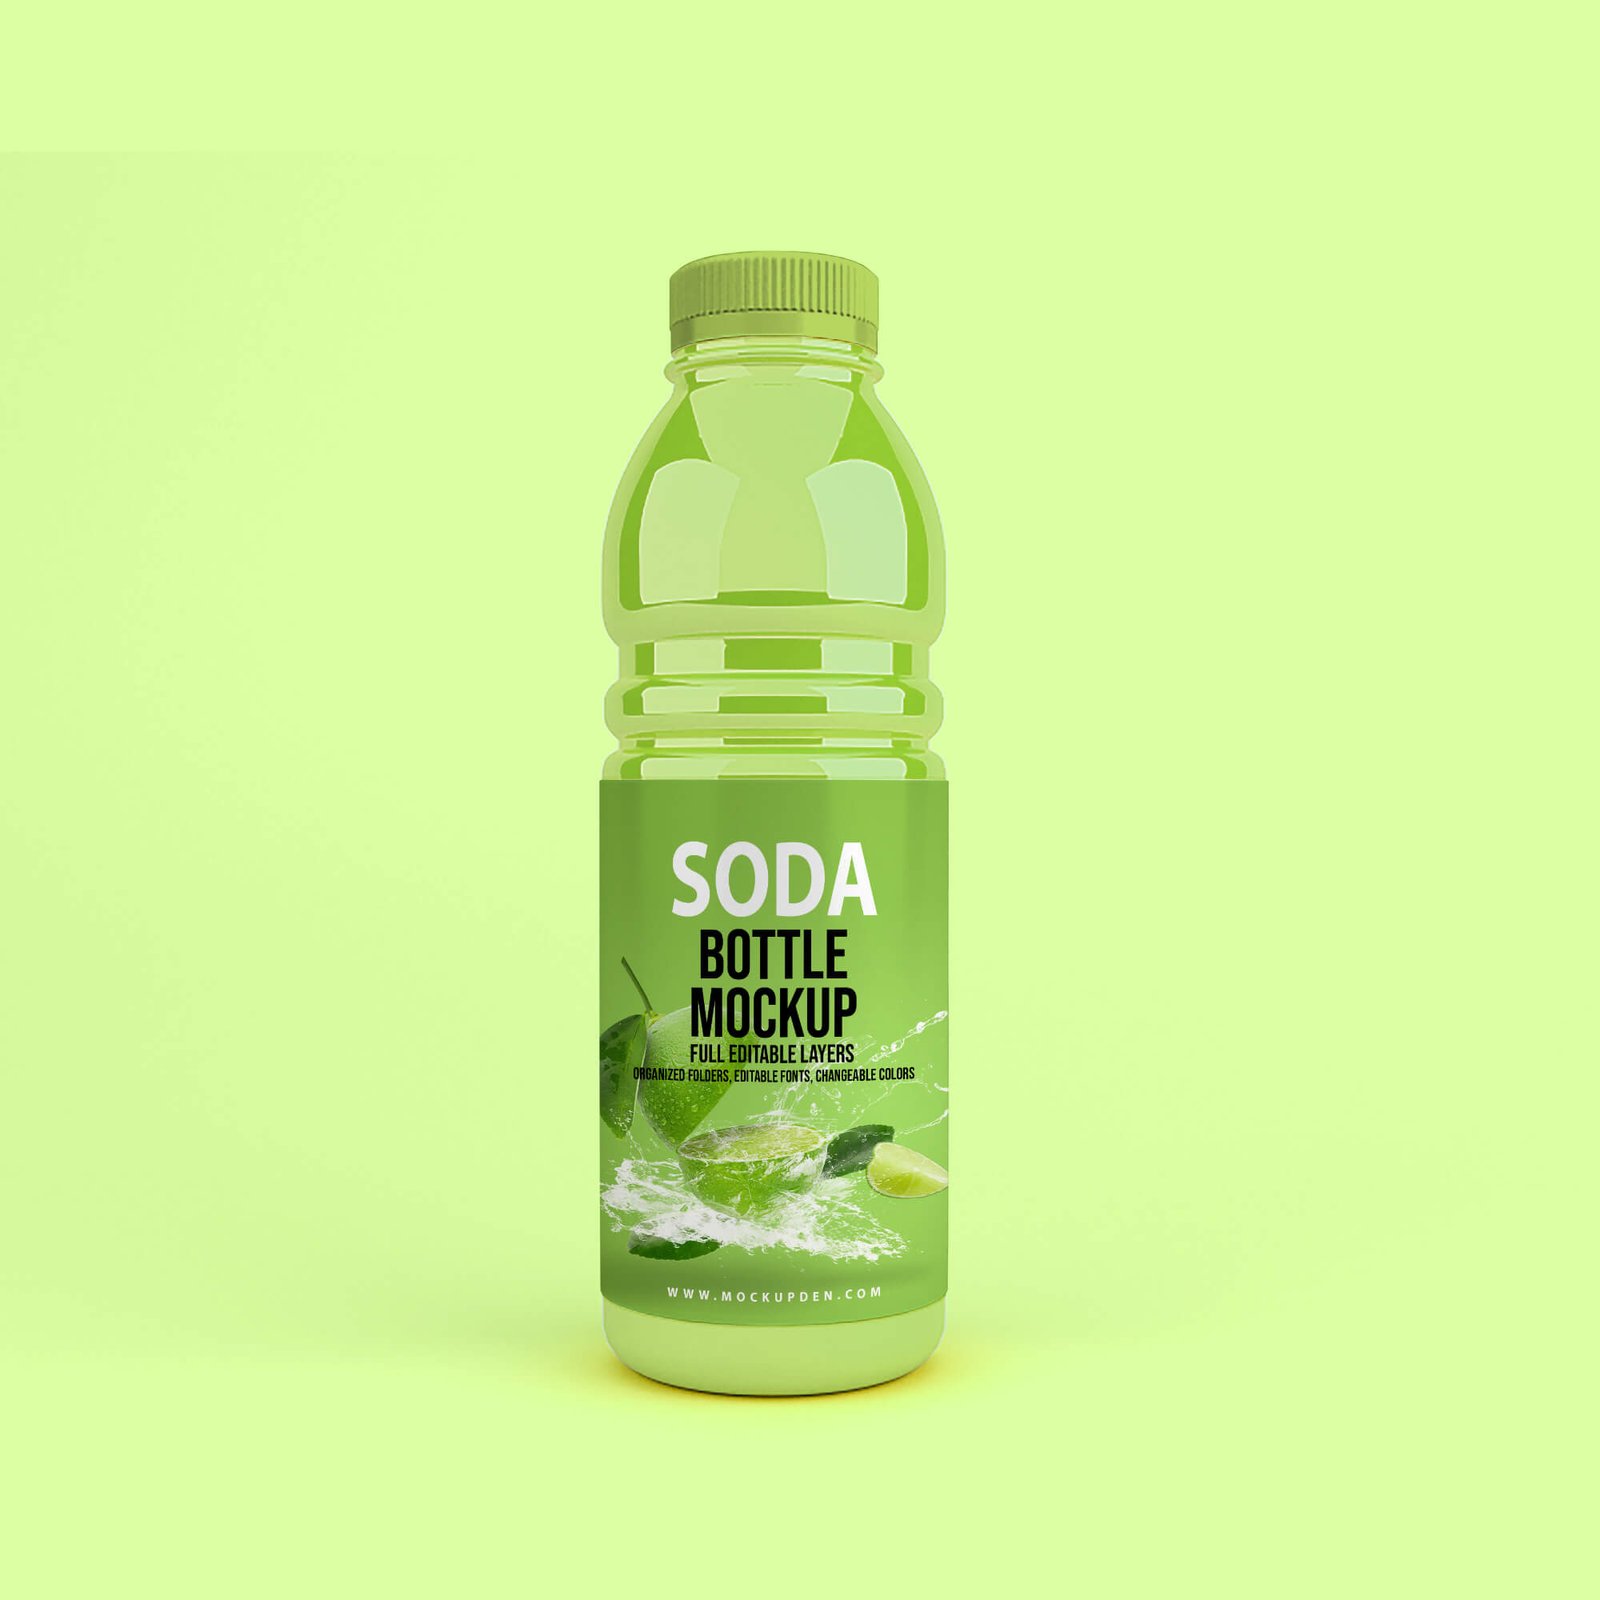 Design Free Soda Bottle Mockup PSD Template (2)